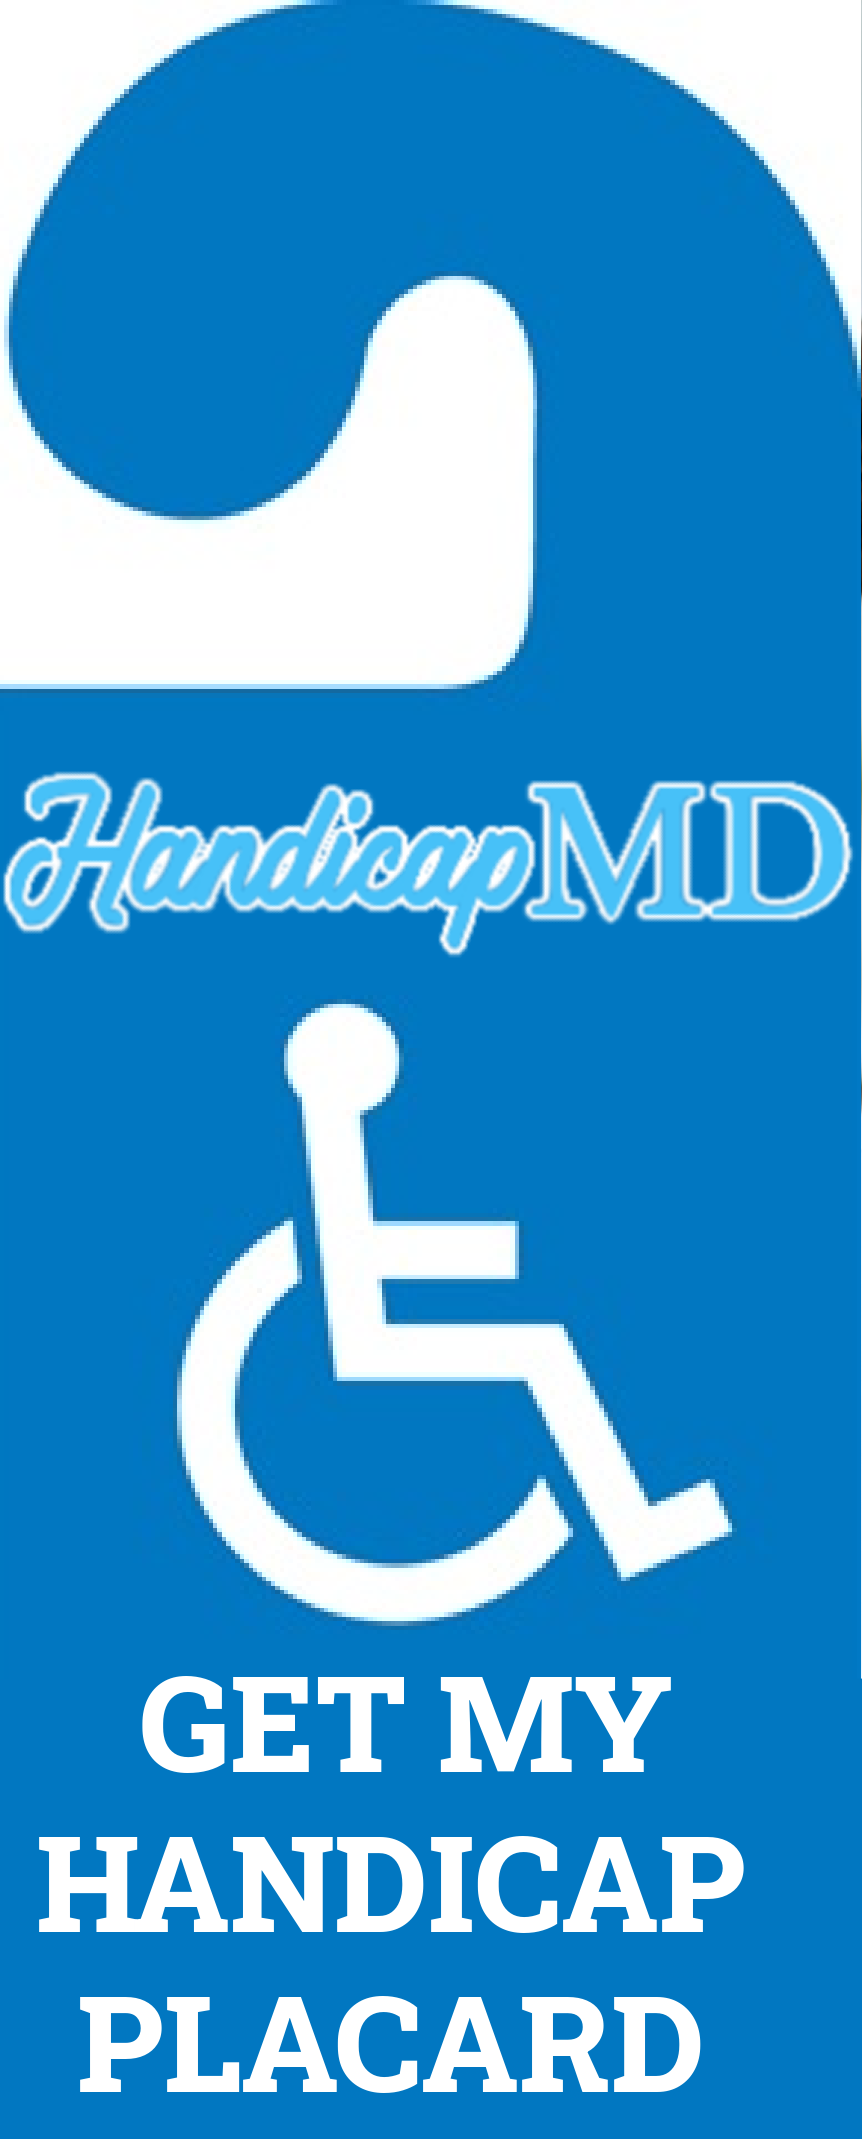 Handicap Placard Violations and Penalties in Florida